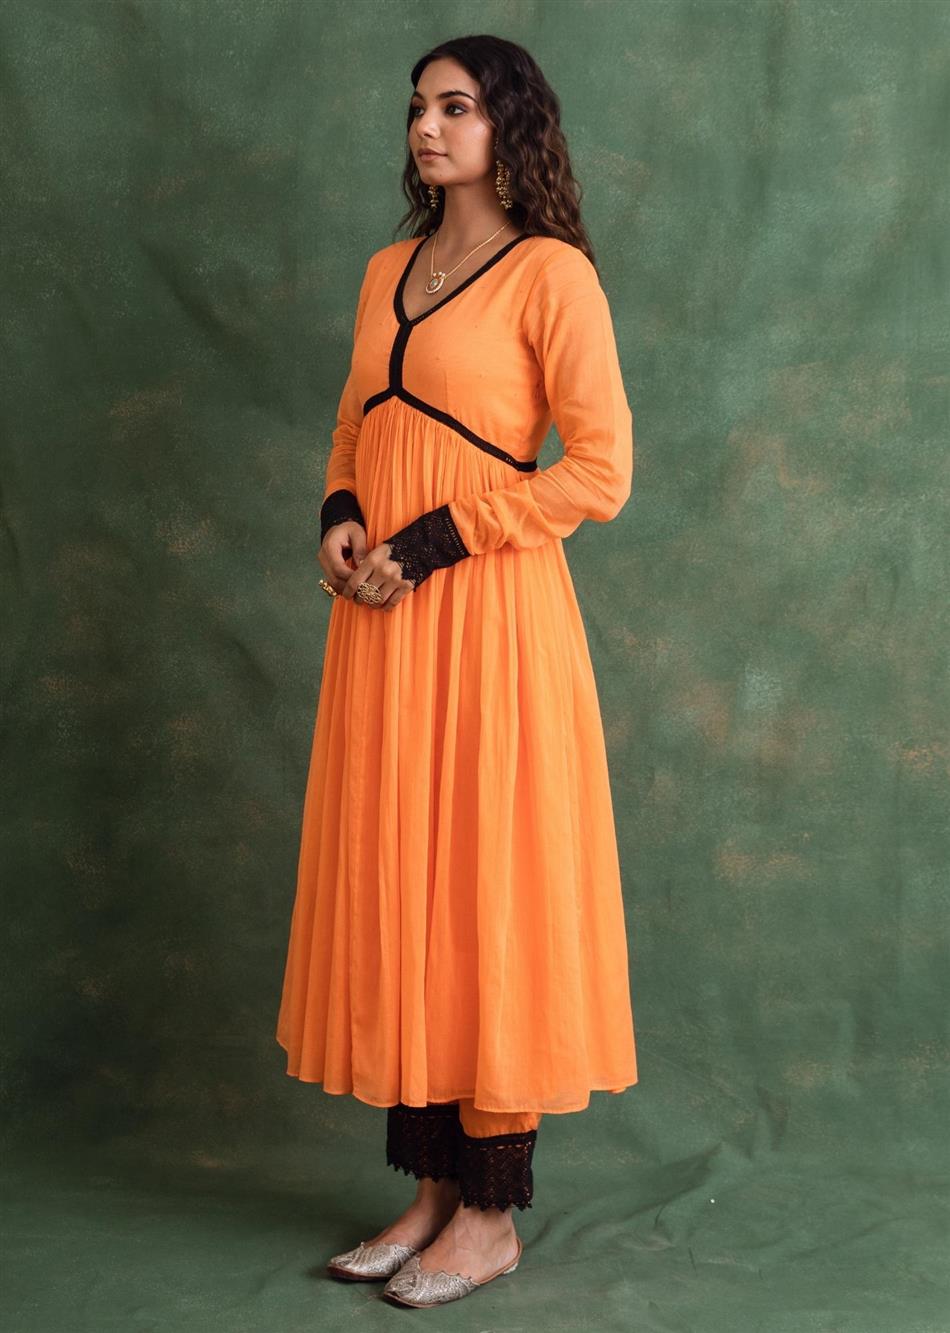 Rangrezee - Candy Orange Anarkali Kurta with Black Lace Details By Jovi Fashion